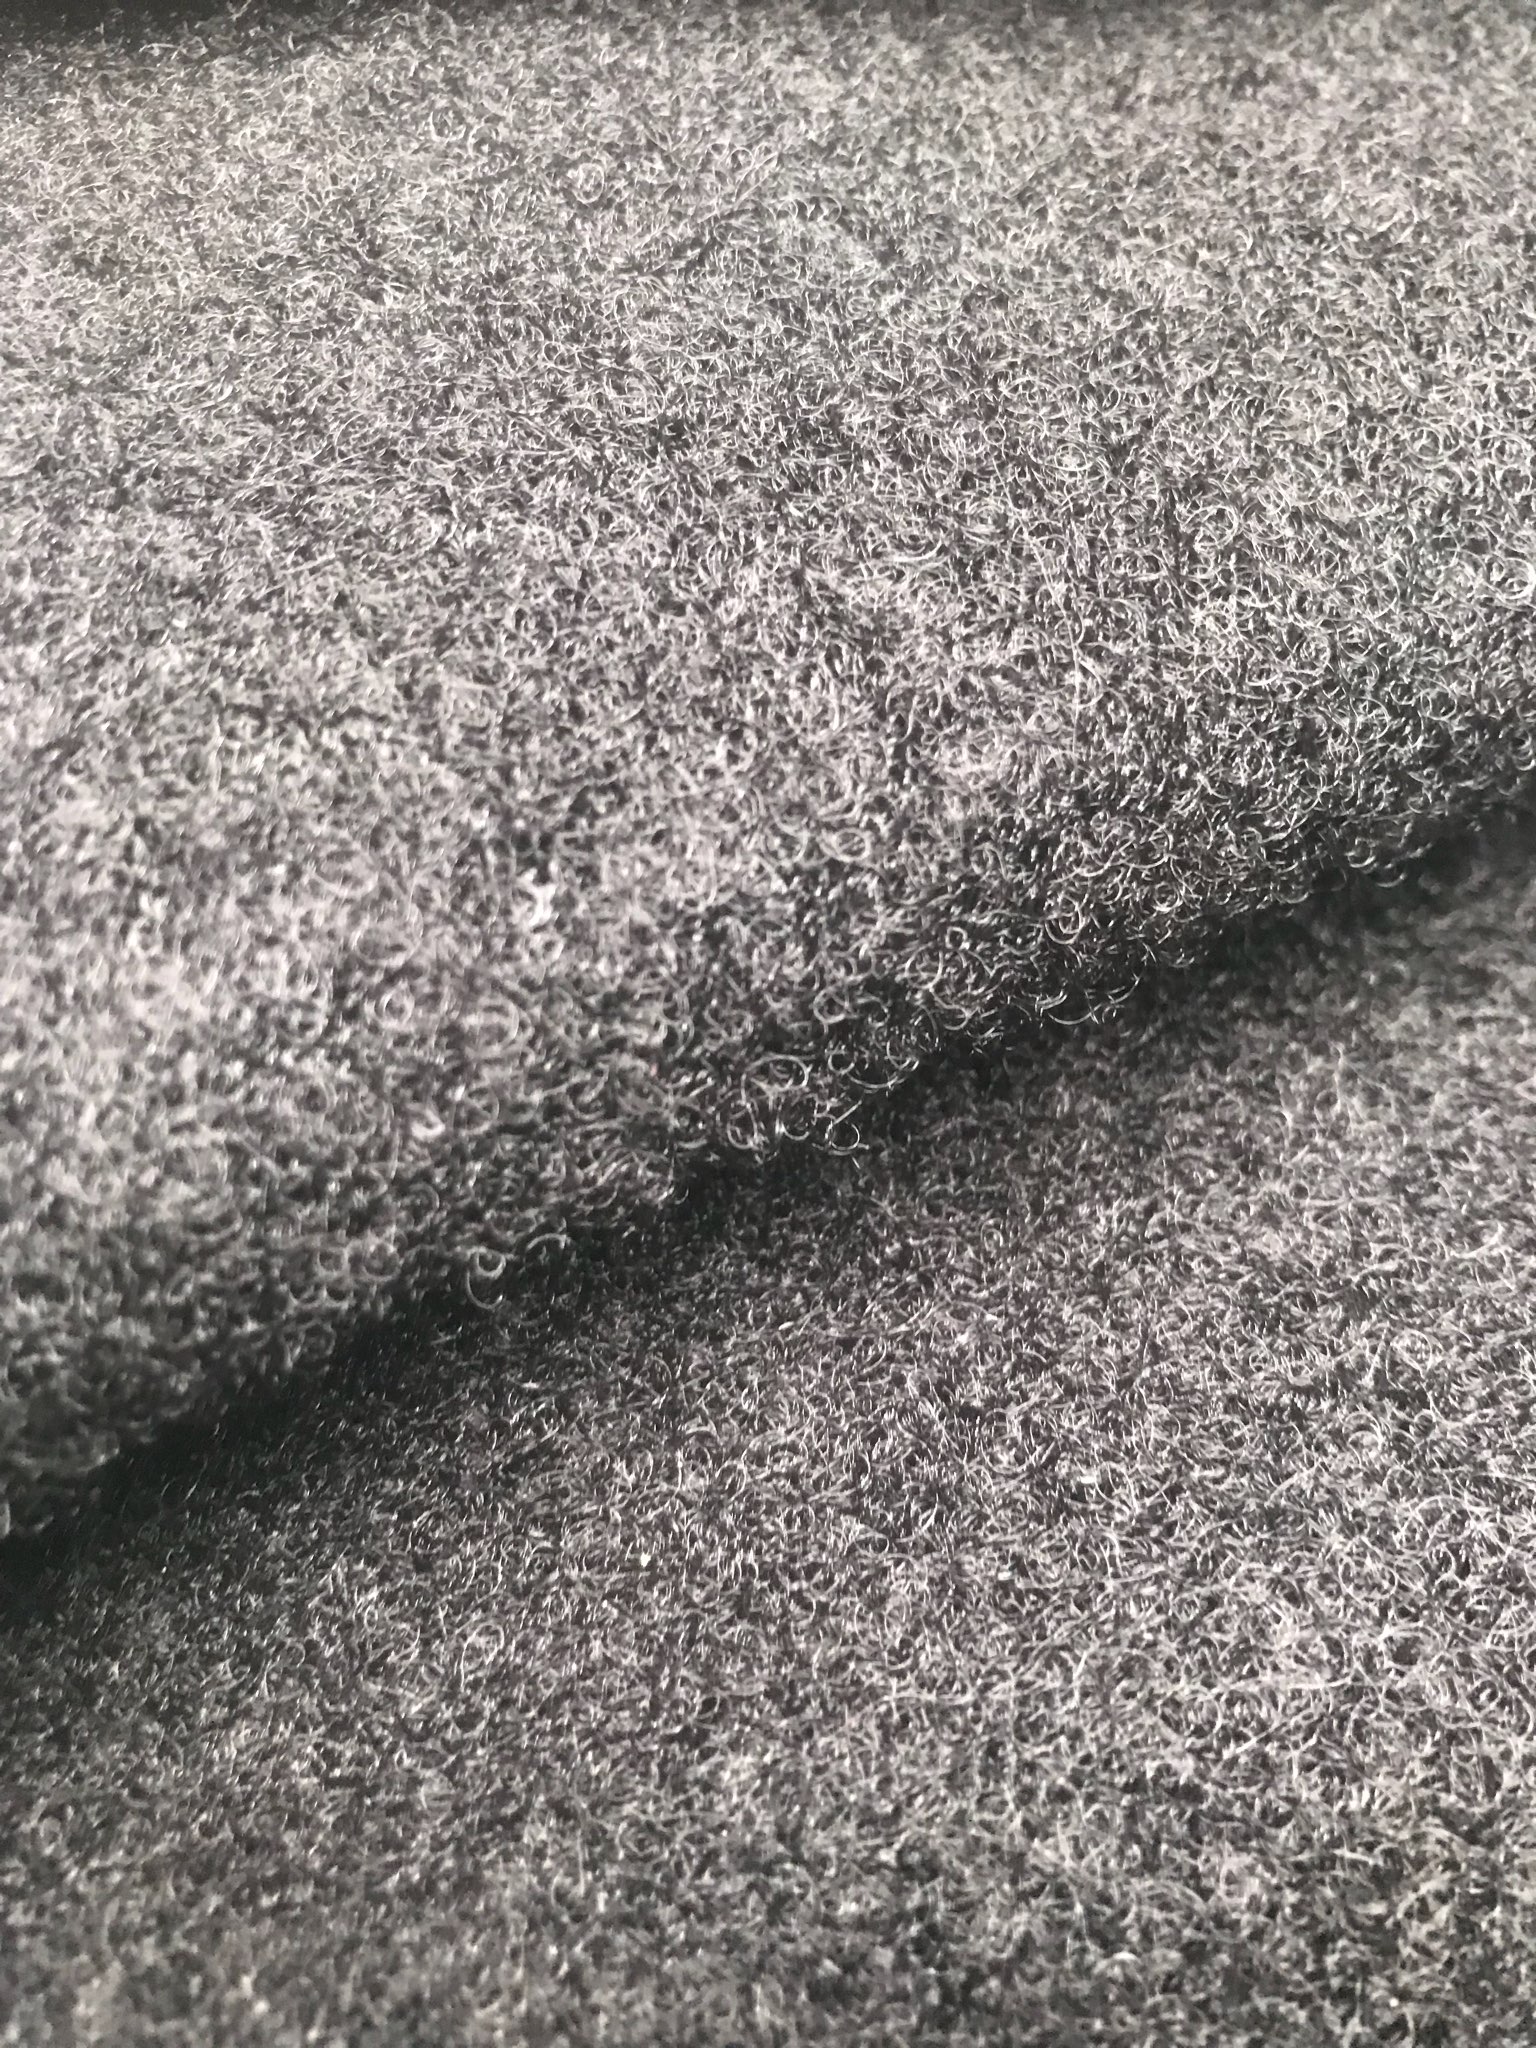 loop nylon fabric